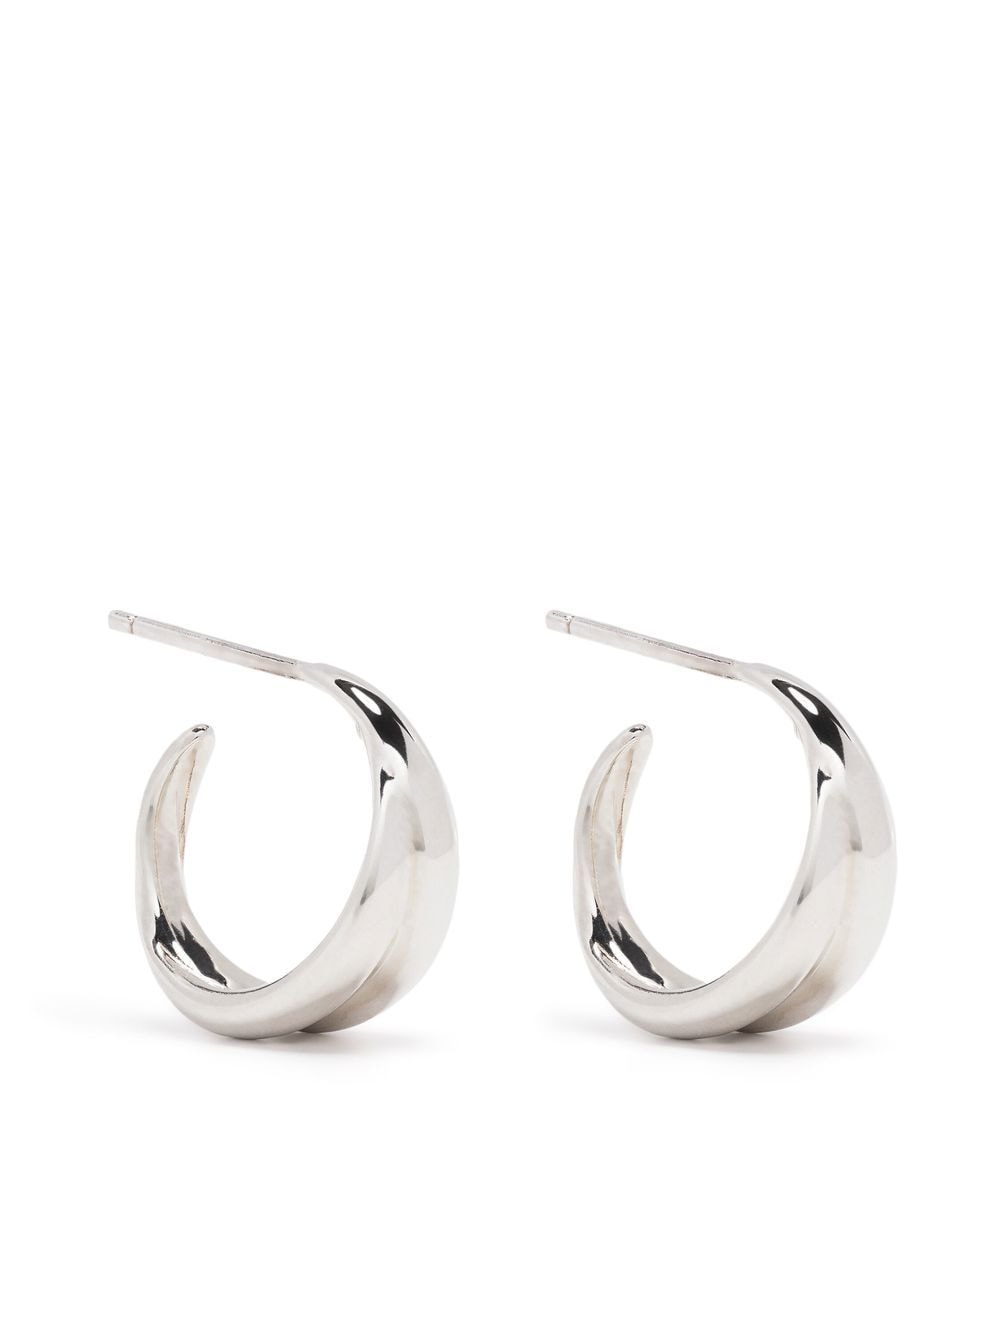 Dinny Hall small Twist hoop earrings - Silver